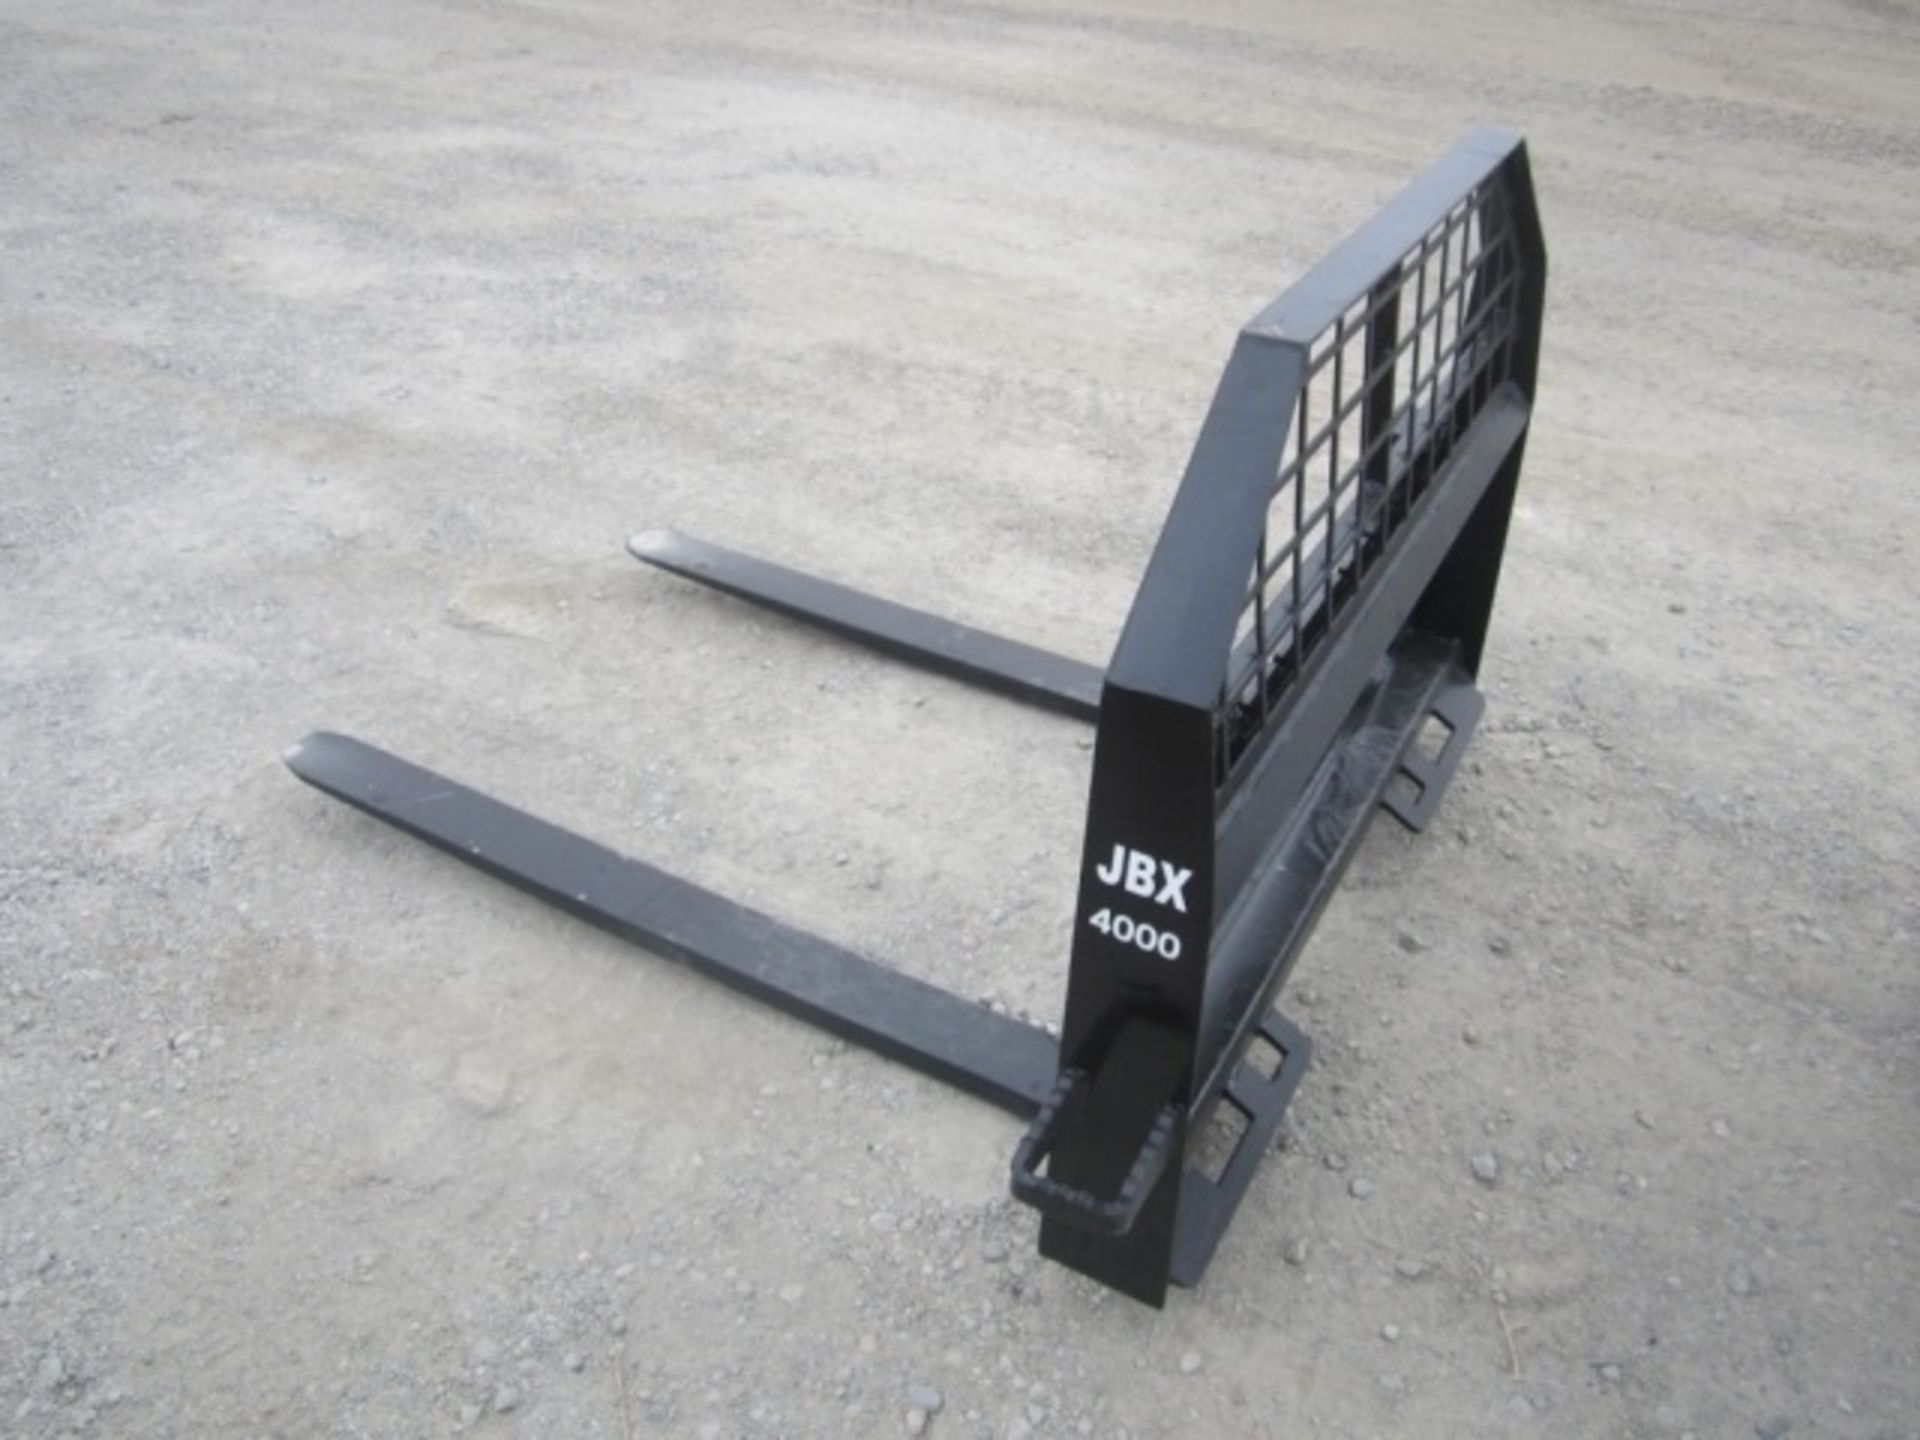 Unused JBX 4000 48" Fork Attachment, Fits Skid Steers - Image 7 of 15